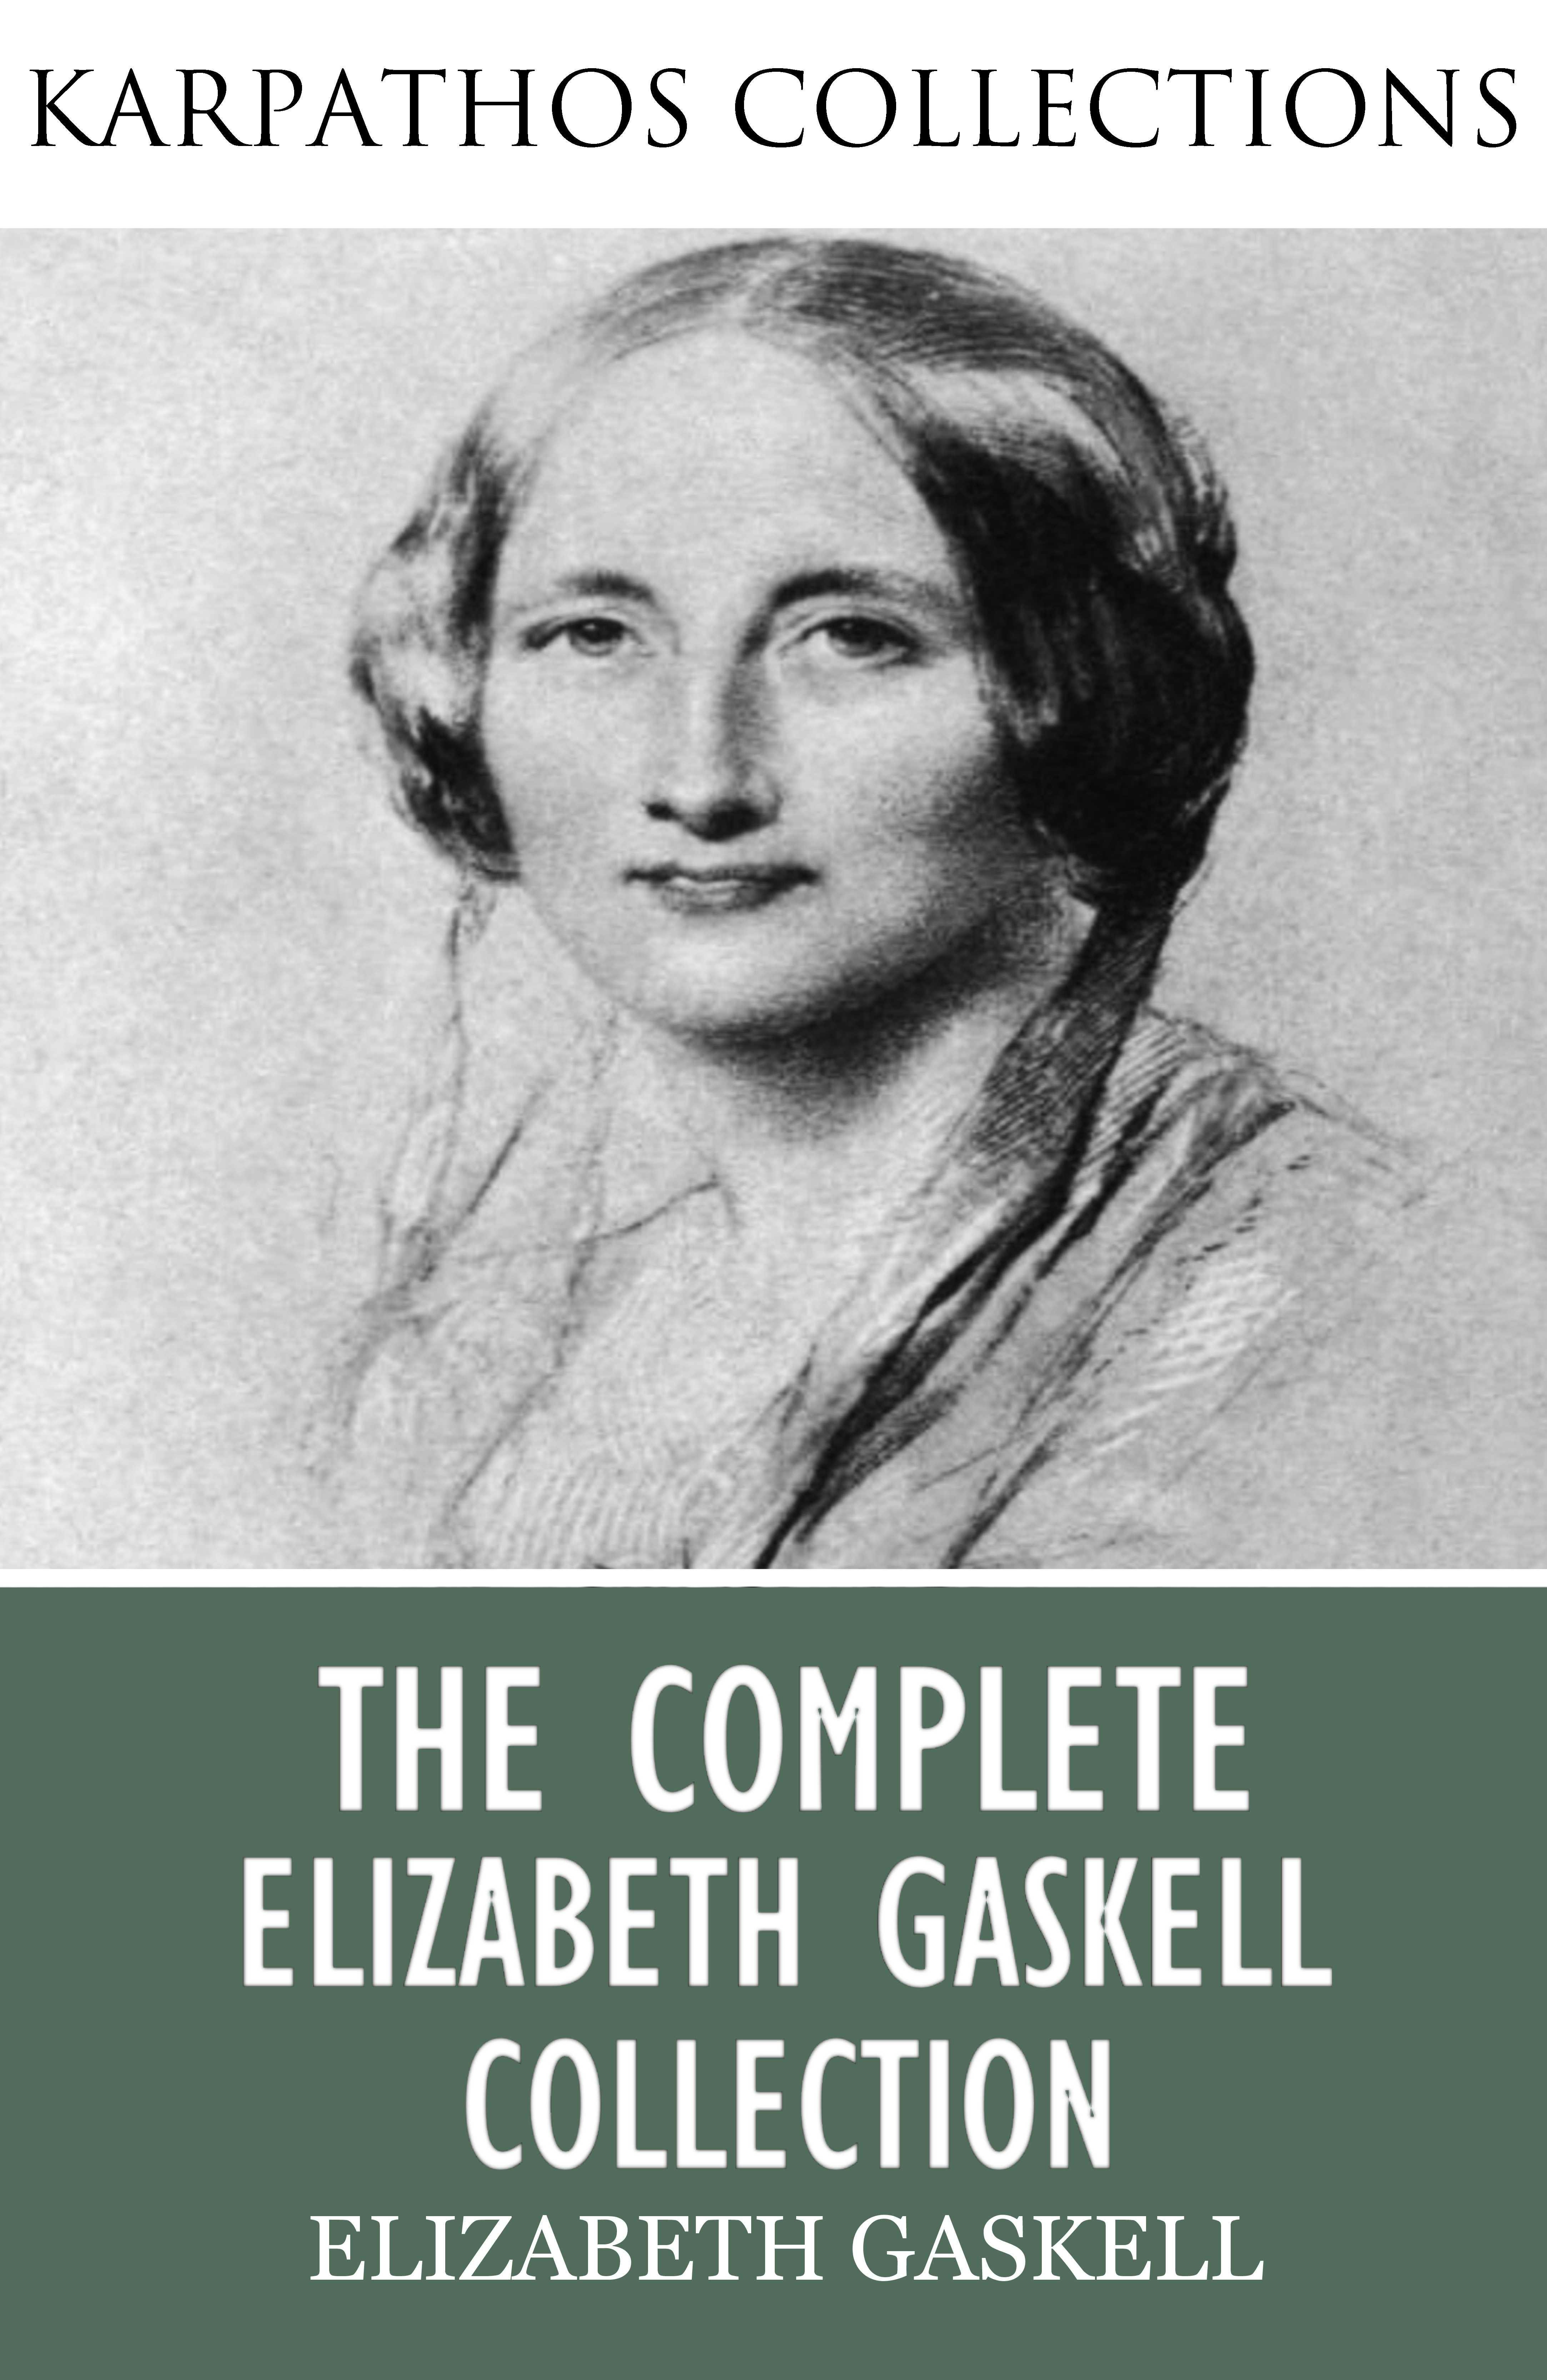 Elizabeth Gaskell Collection [DVD]